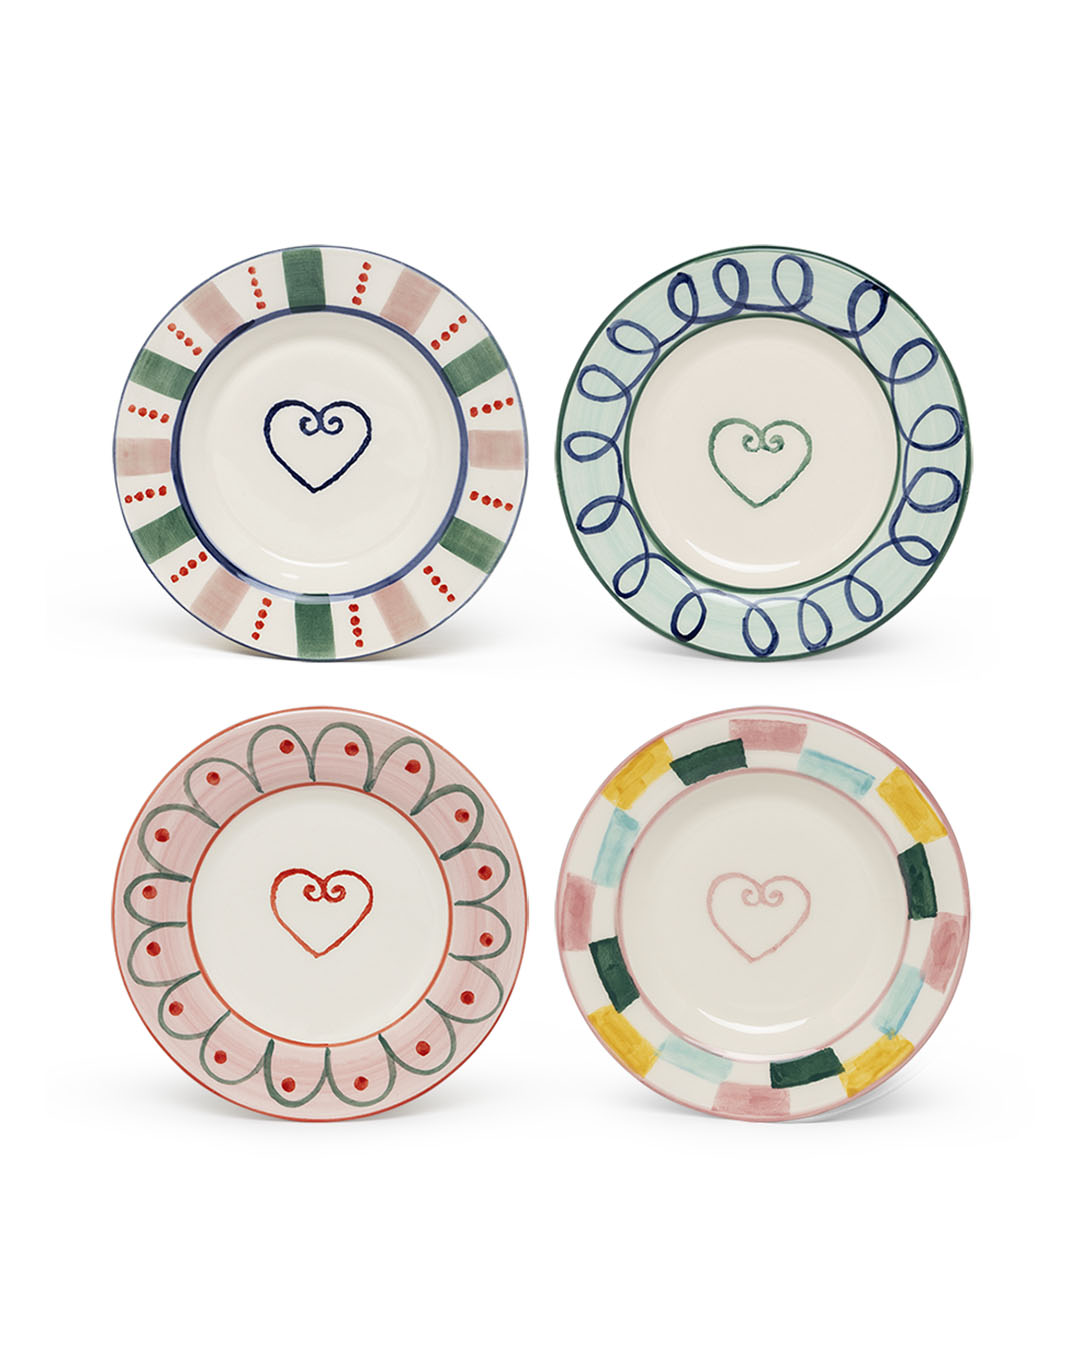 Heart bread plates - coasters MIX - Set of 4